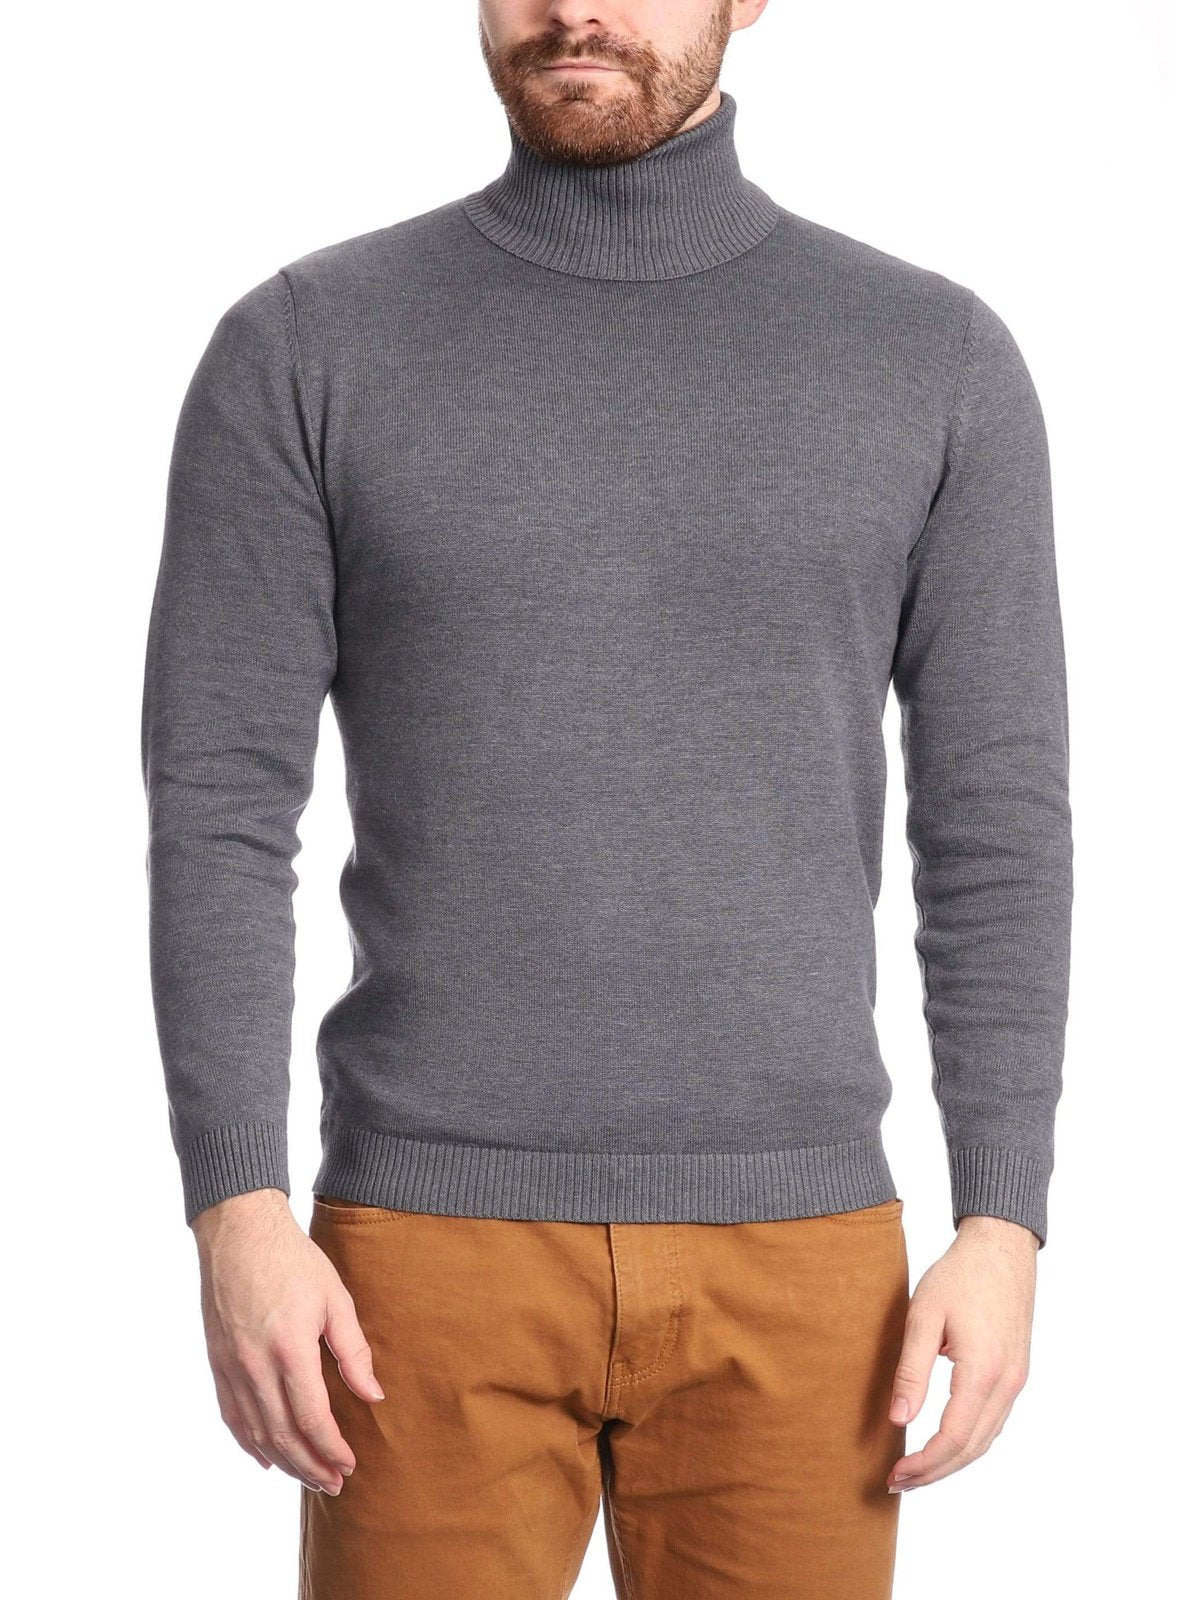 Arthur Black Default Category Migrated Gray / 5XL Arthur Black Men's Solid Gray Pullover Cotton Blend Turtleneck Sweater Shirt